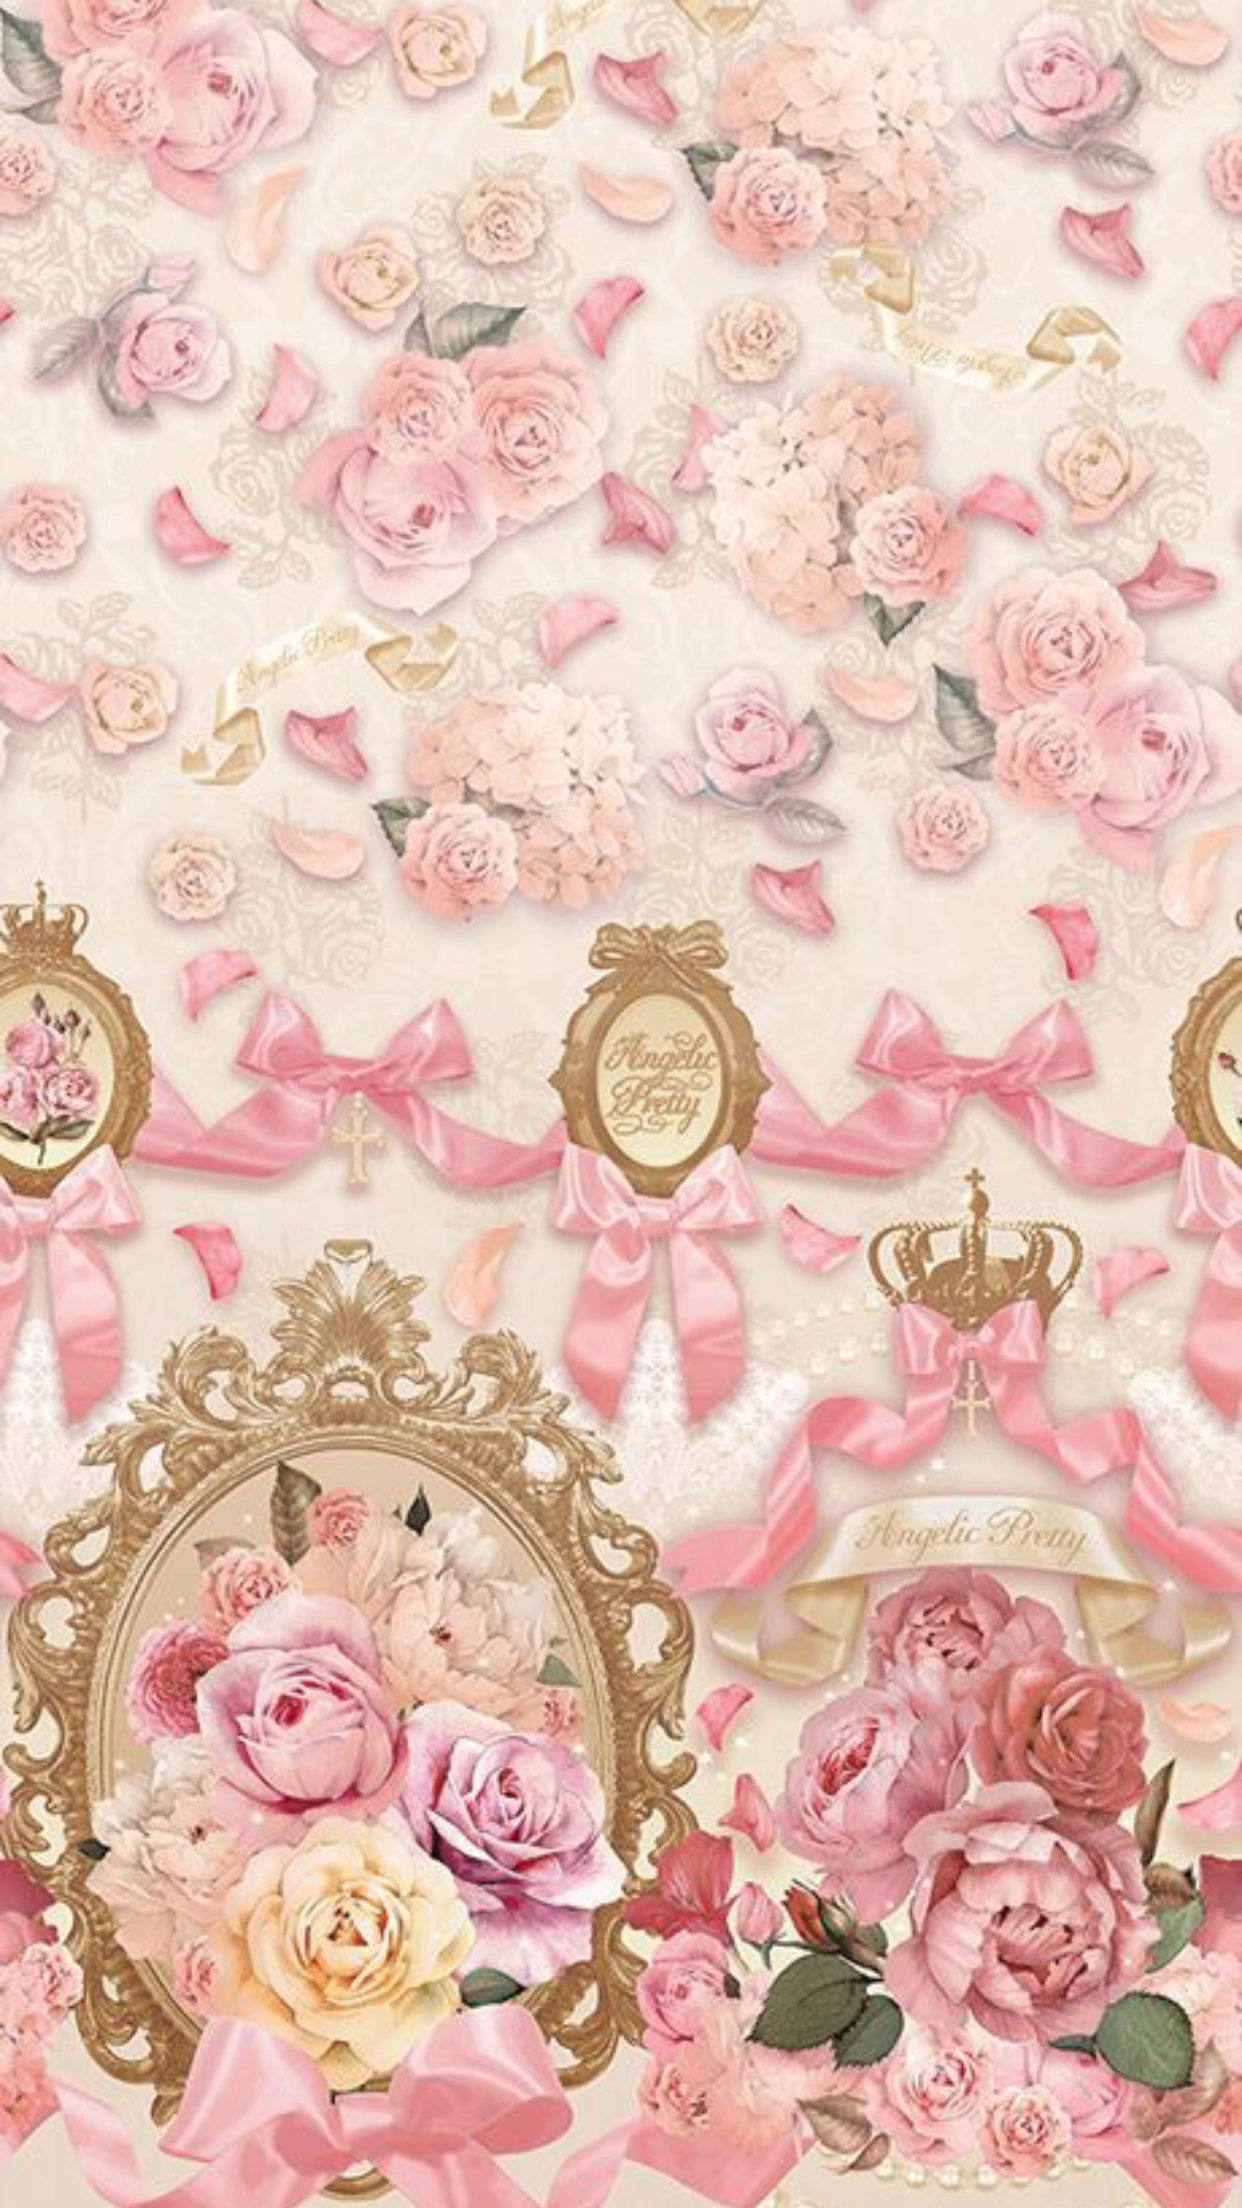 Emo Rose Wallpapers